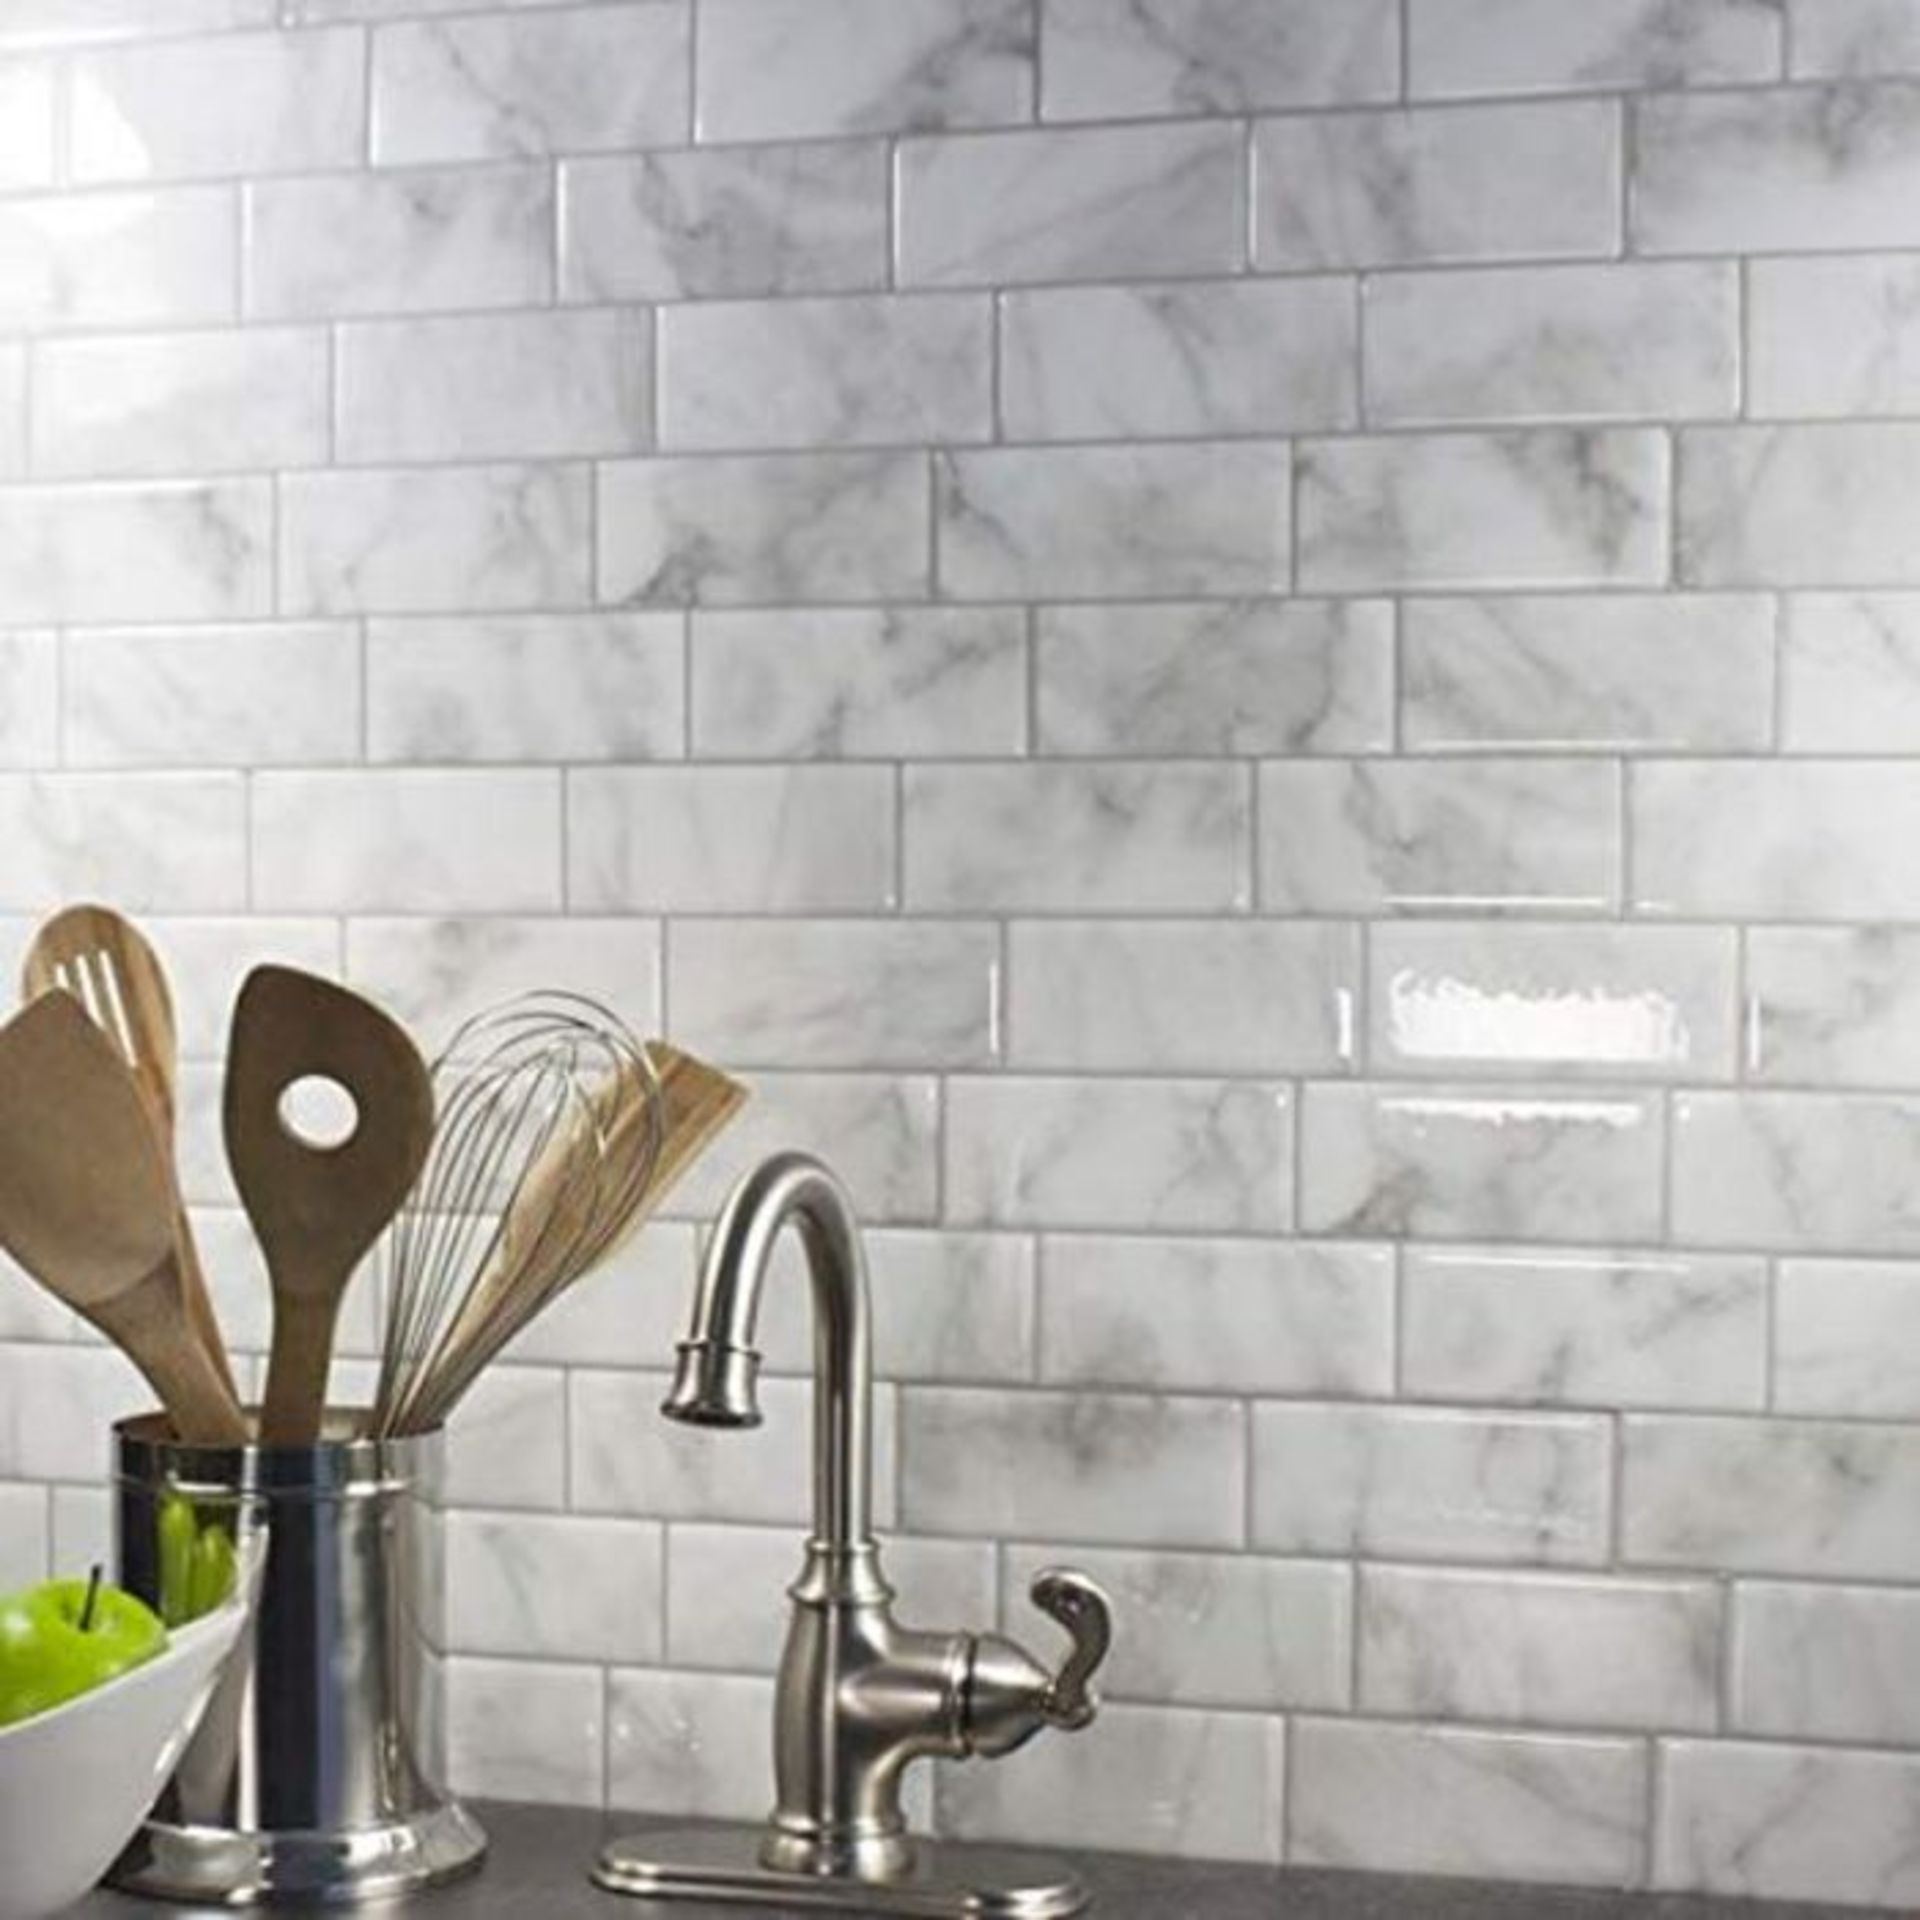 Olly & I Self Adhesive Tiles, Peel and Stick Backsplash for Kitchen, Bathroom, Wall St